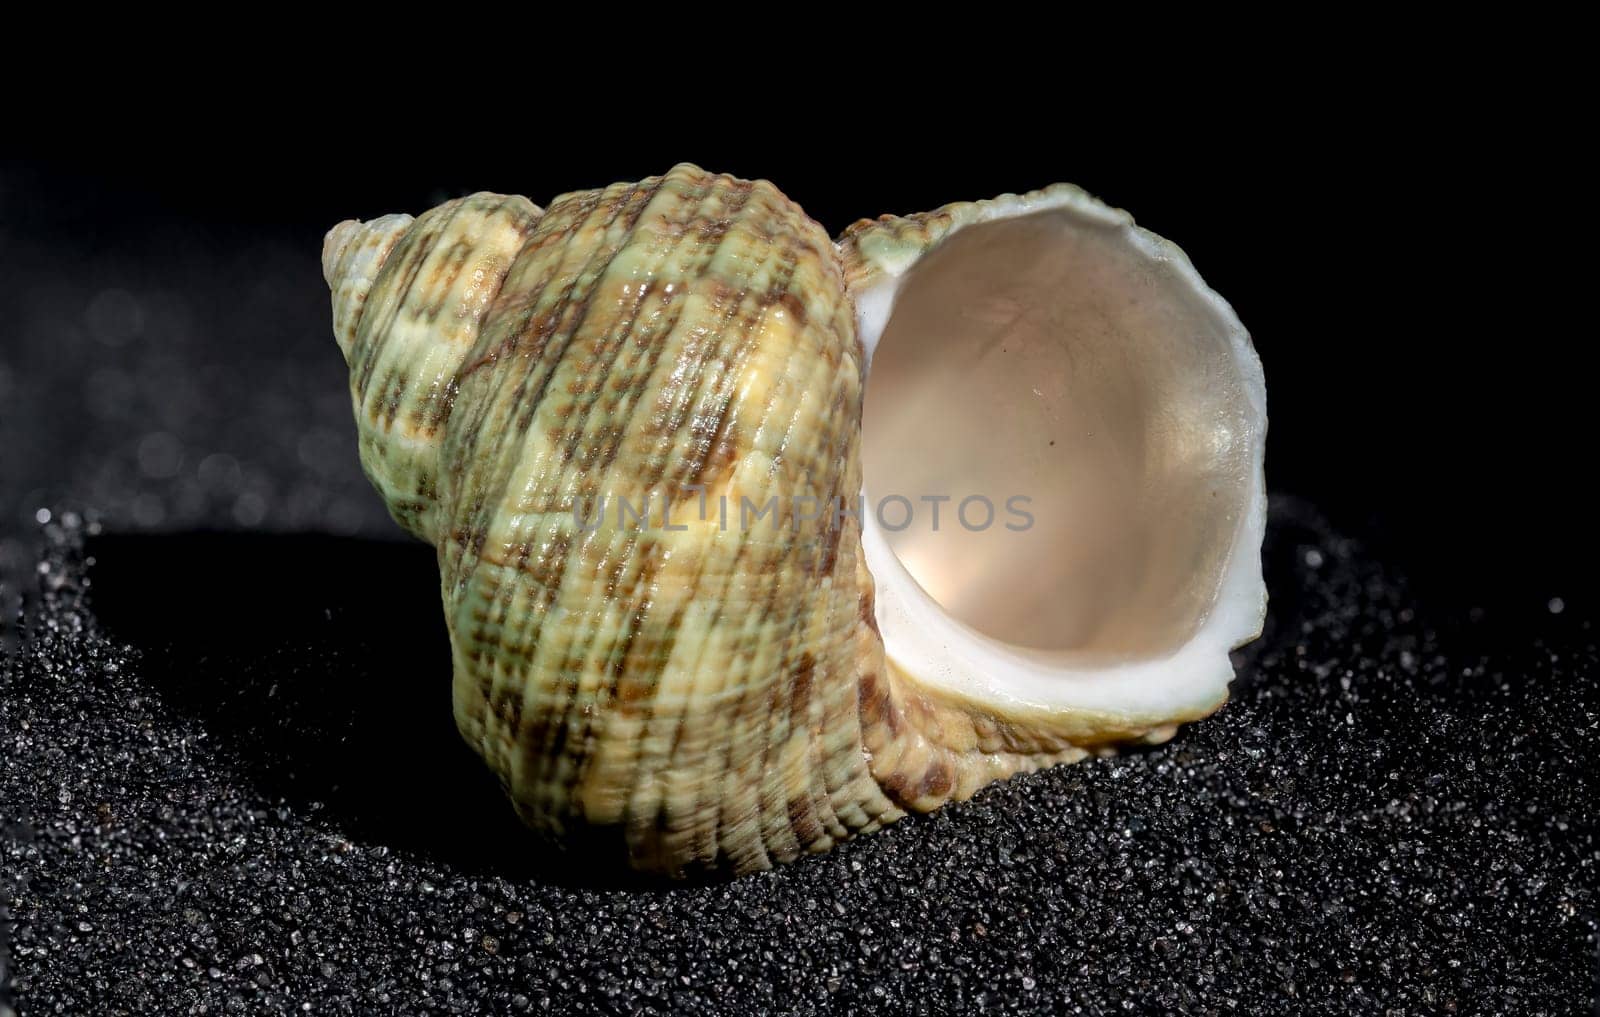 Turbinidae lunella undulata seashell on a black sand background close-up